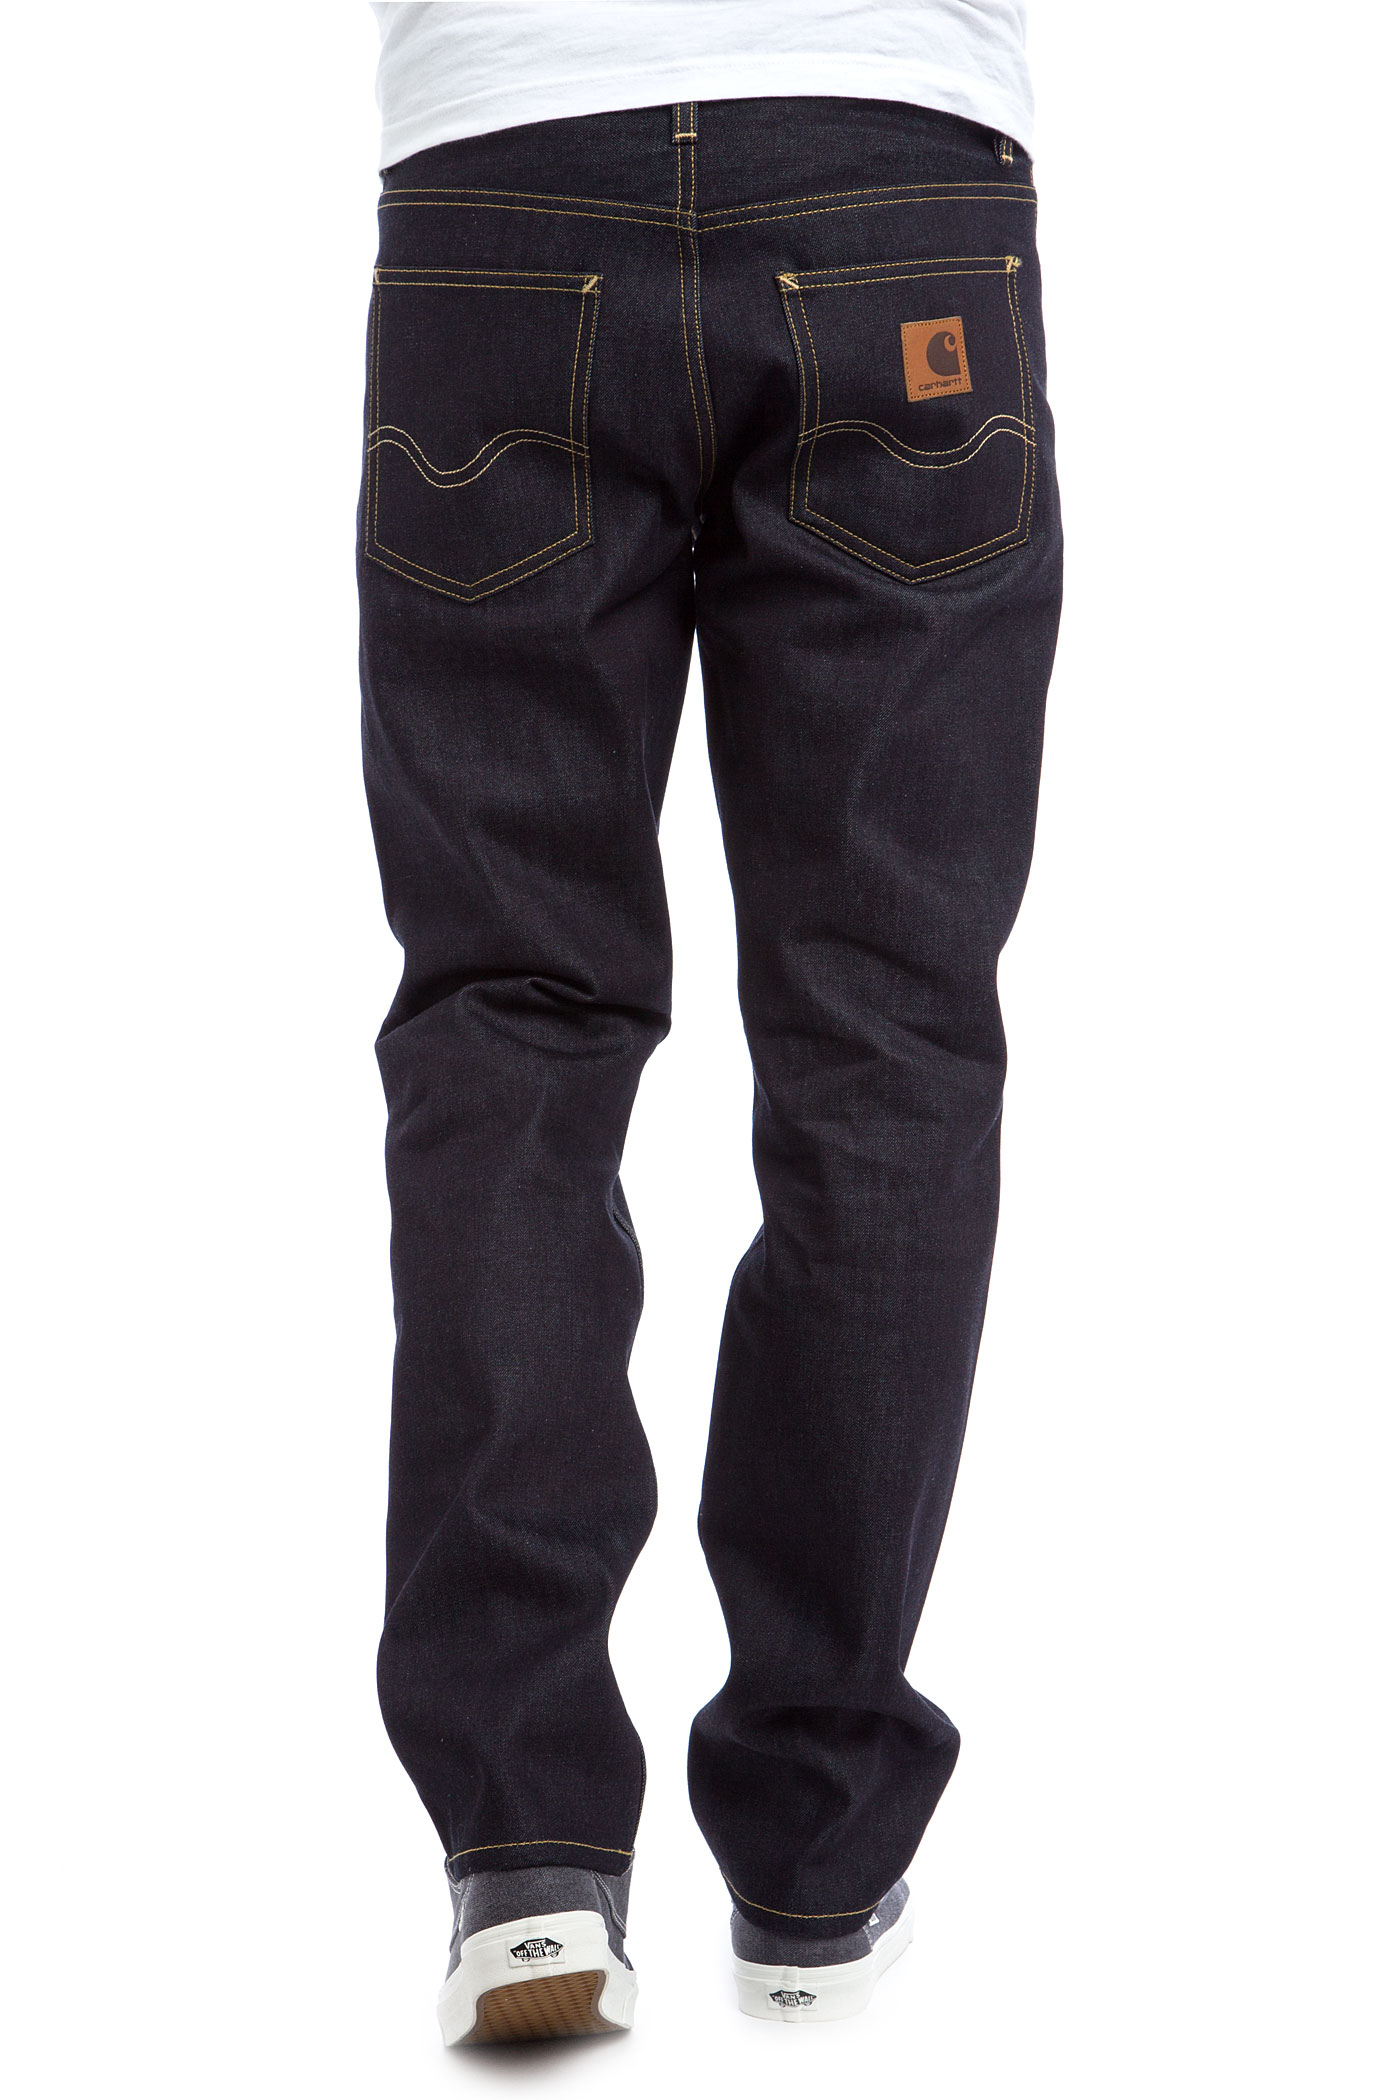 Carhartt WIP Texas Pant Hanford Jeans (blue rigid) buy at skatedeluxe